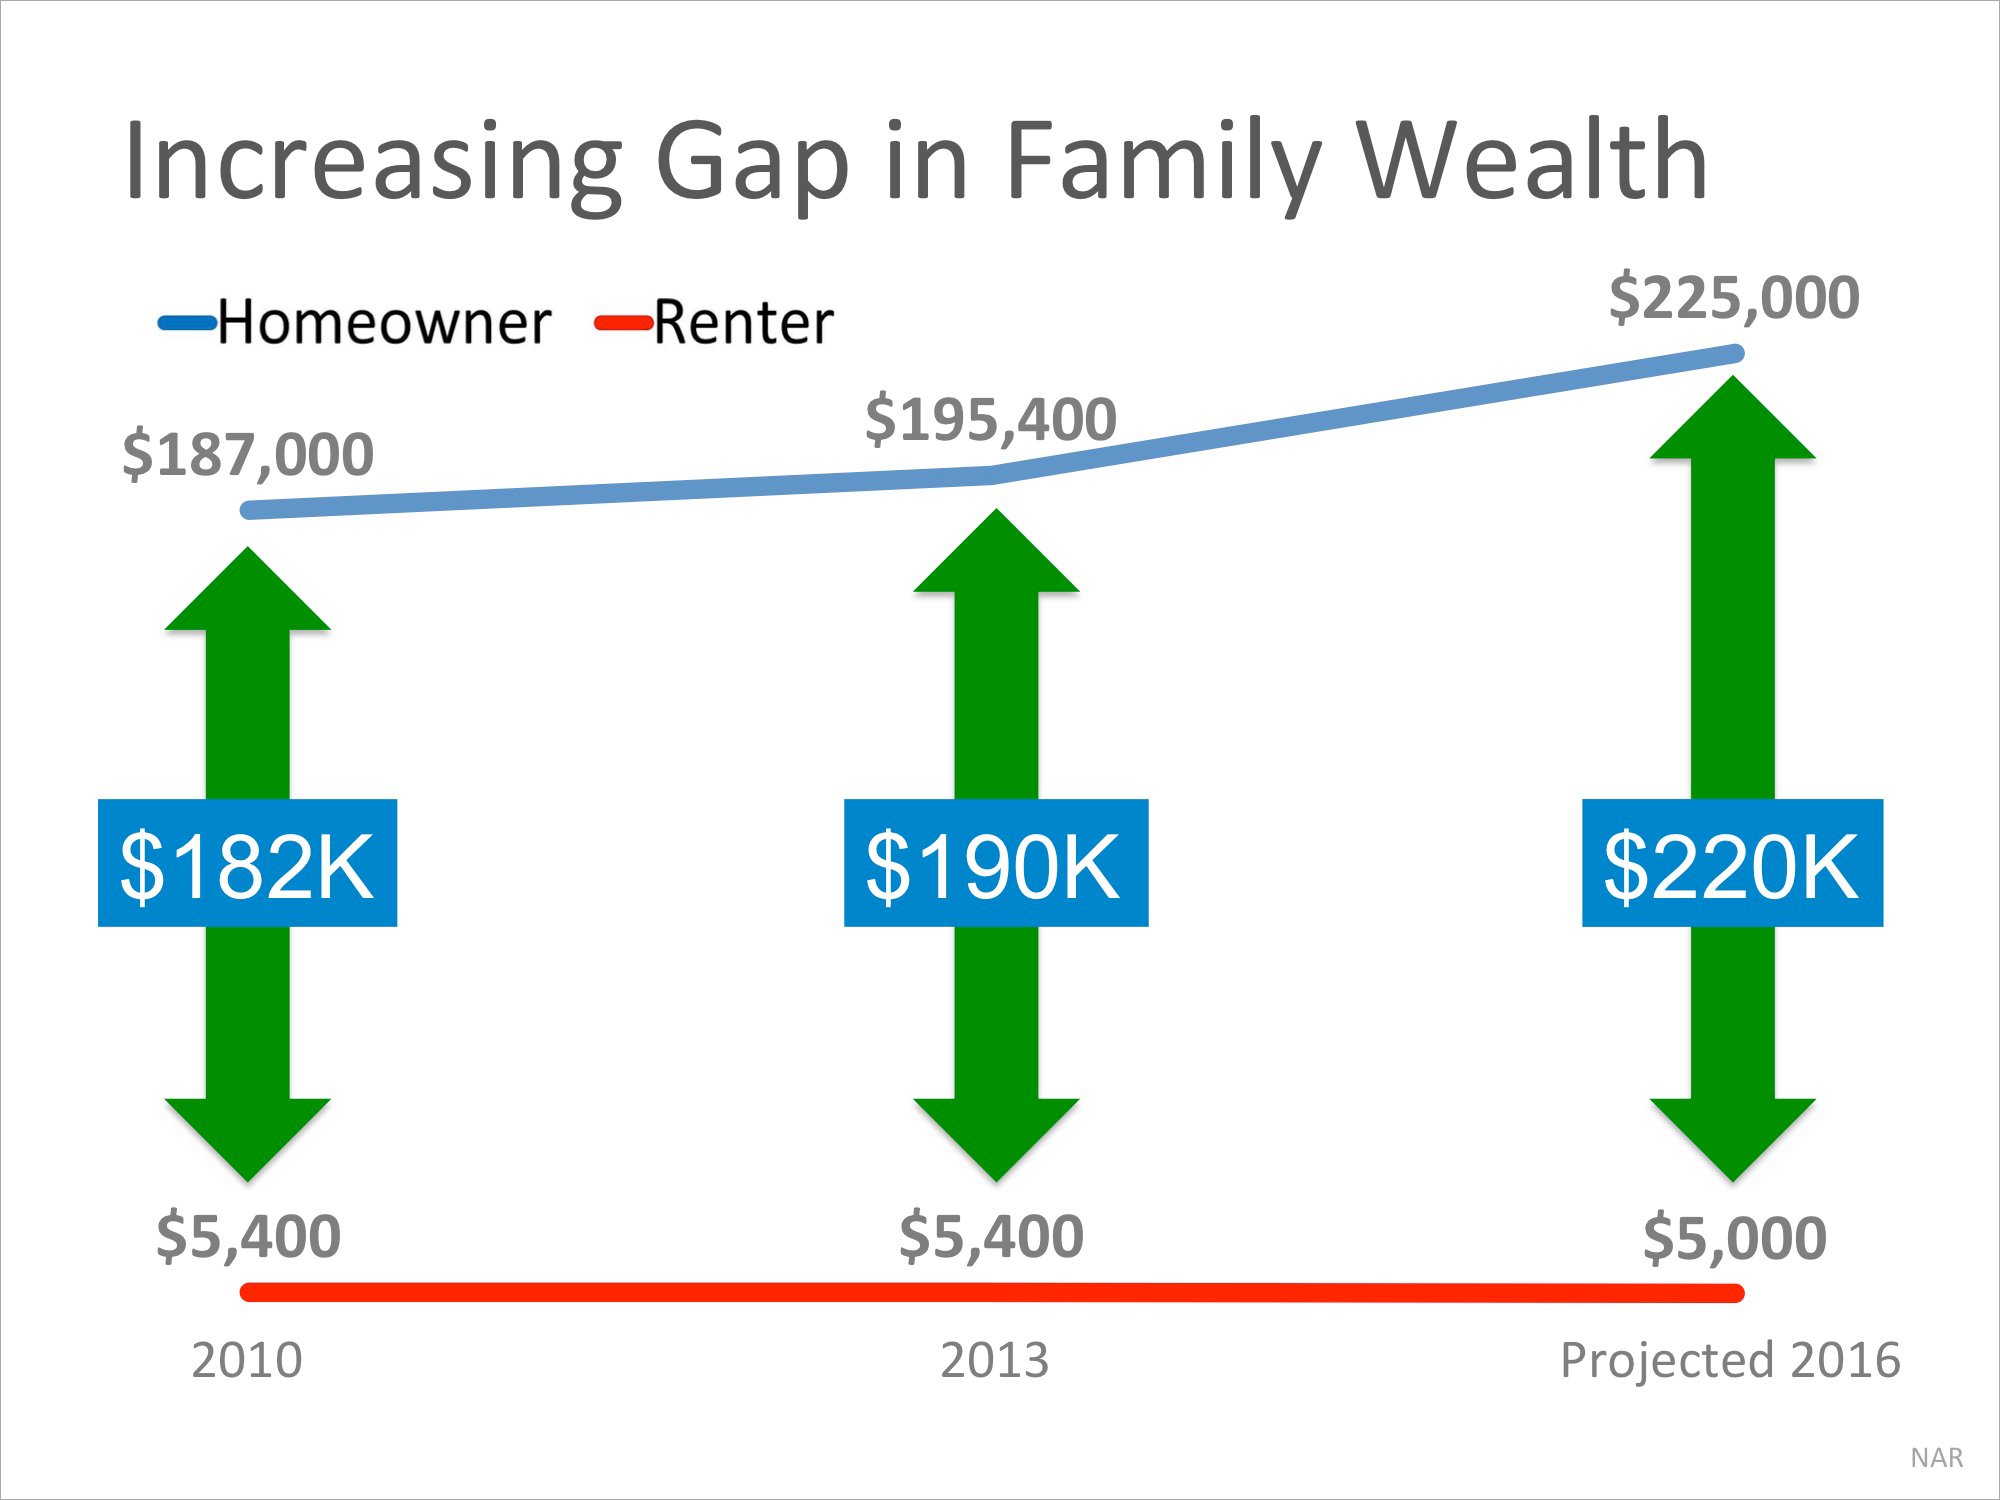 Homeowners net worth